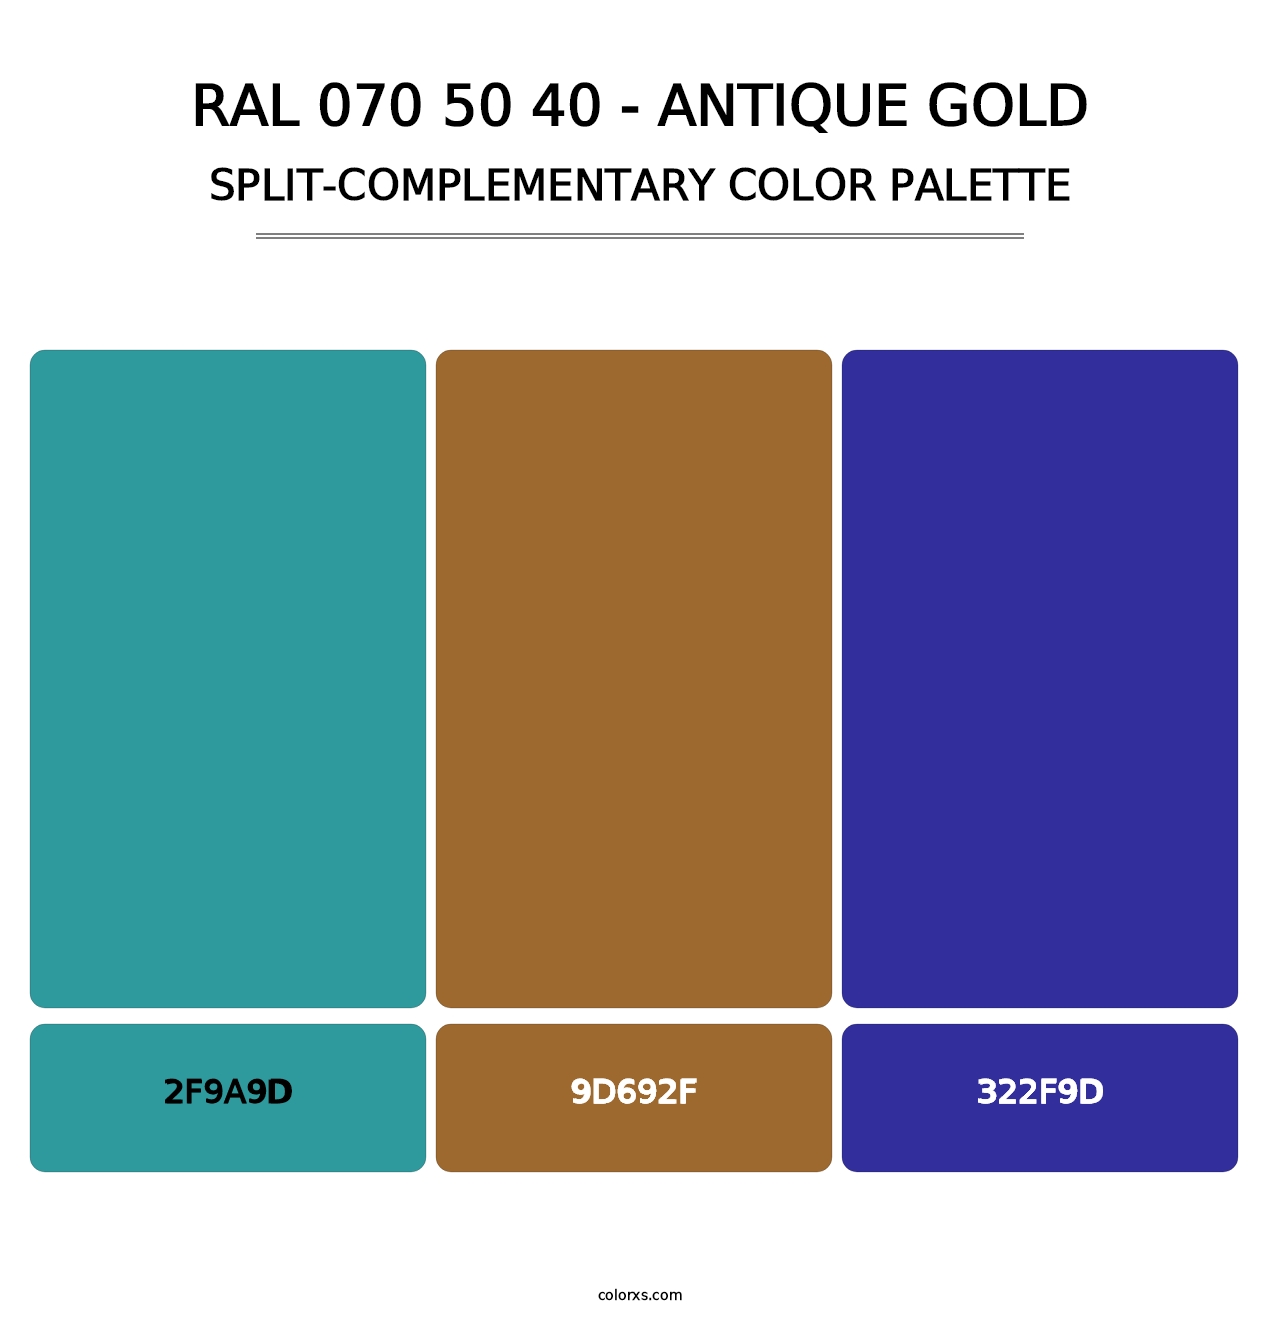 RAL 070 50 40 - Antique Gold - Split-Complementary Color Palette